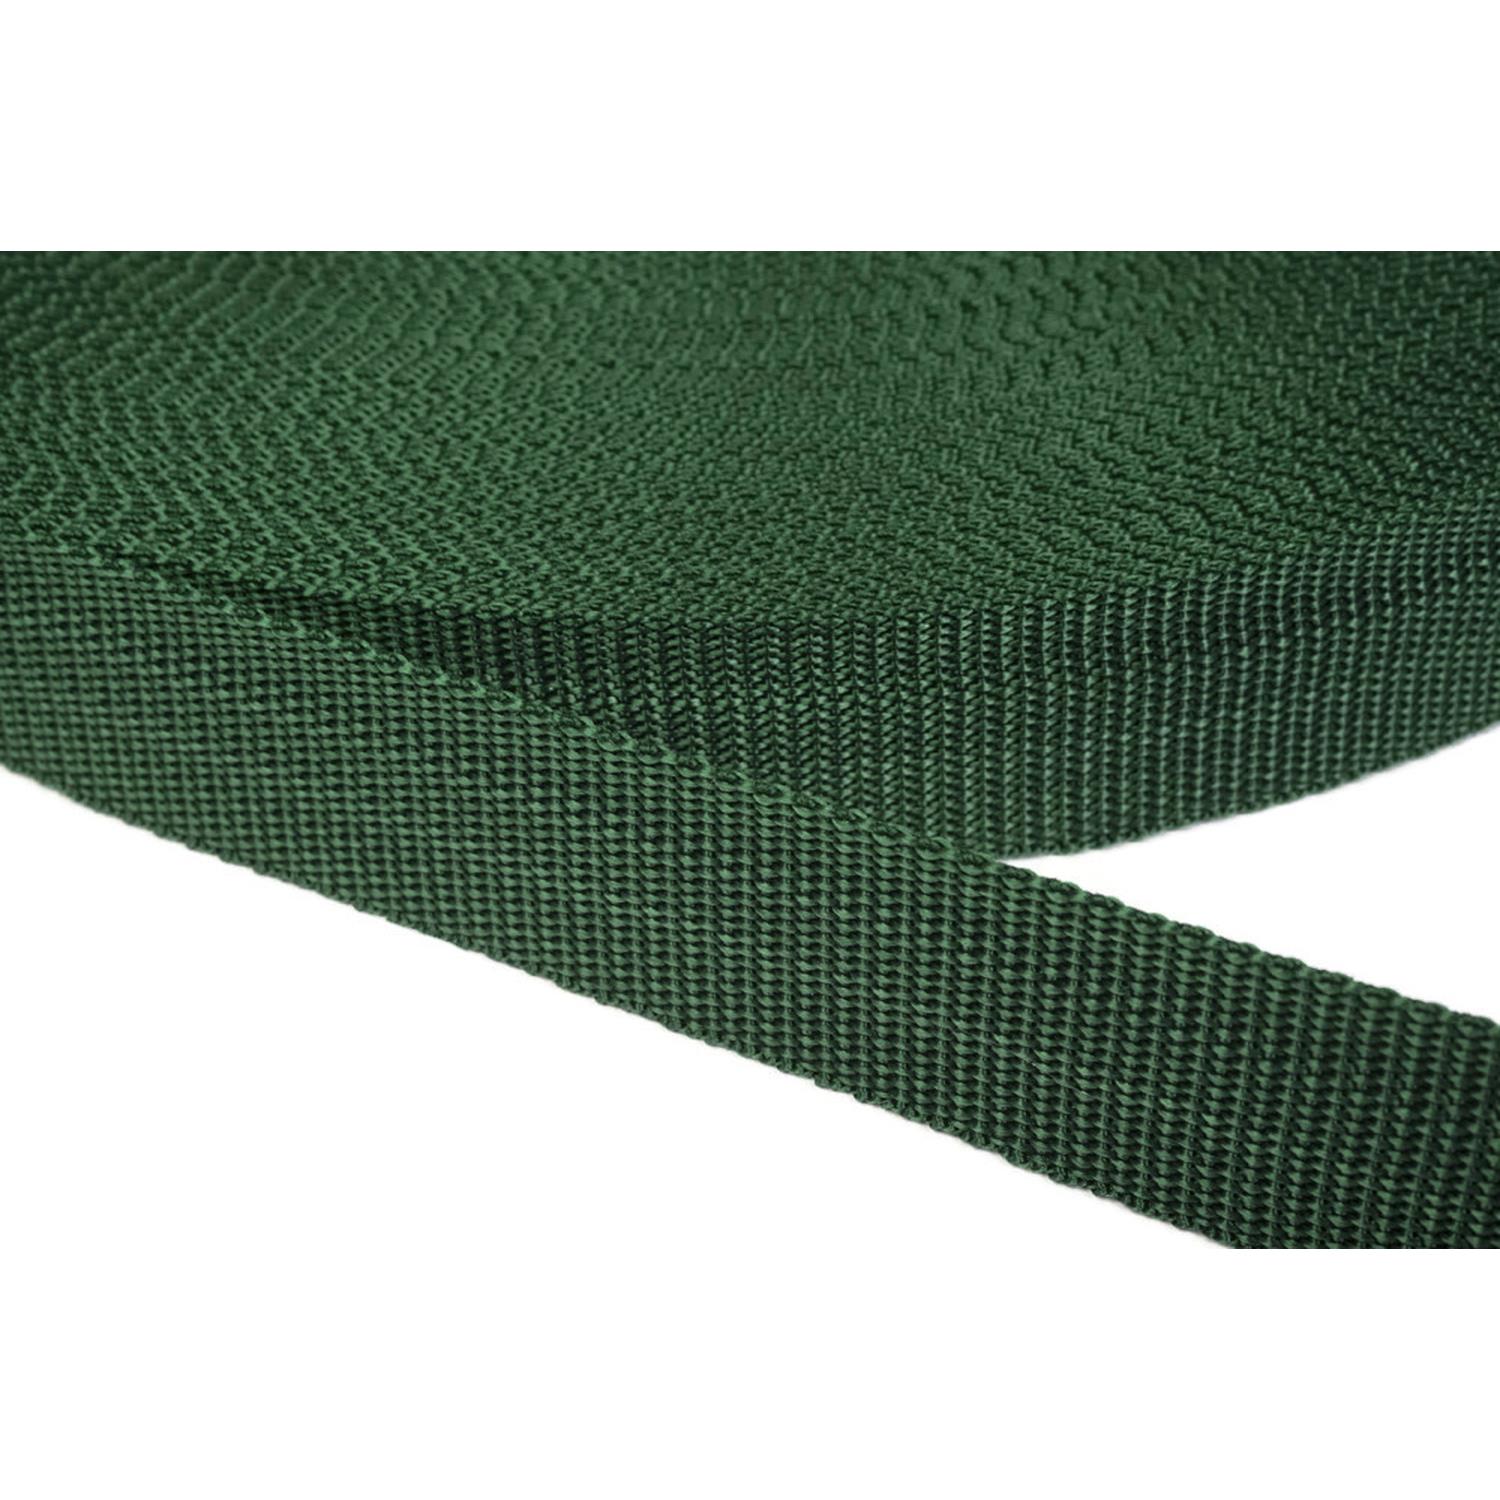 Gurtband 20mm breit aus Polypropylen in 41 Farben 35 - dunkelgrün 12 Meter